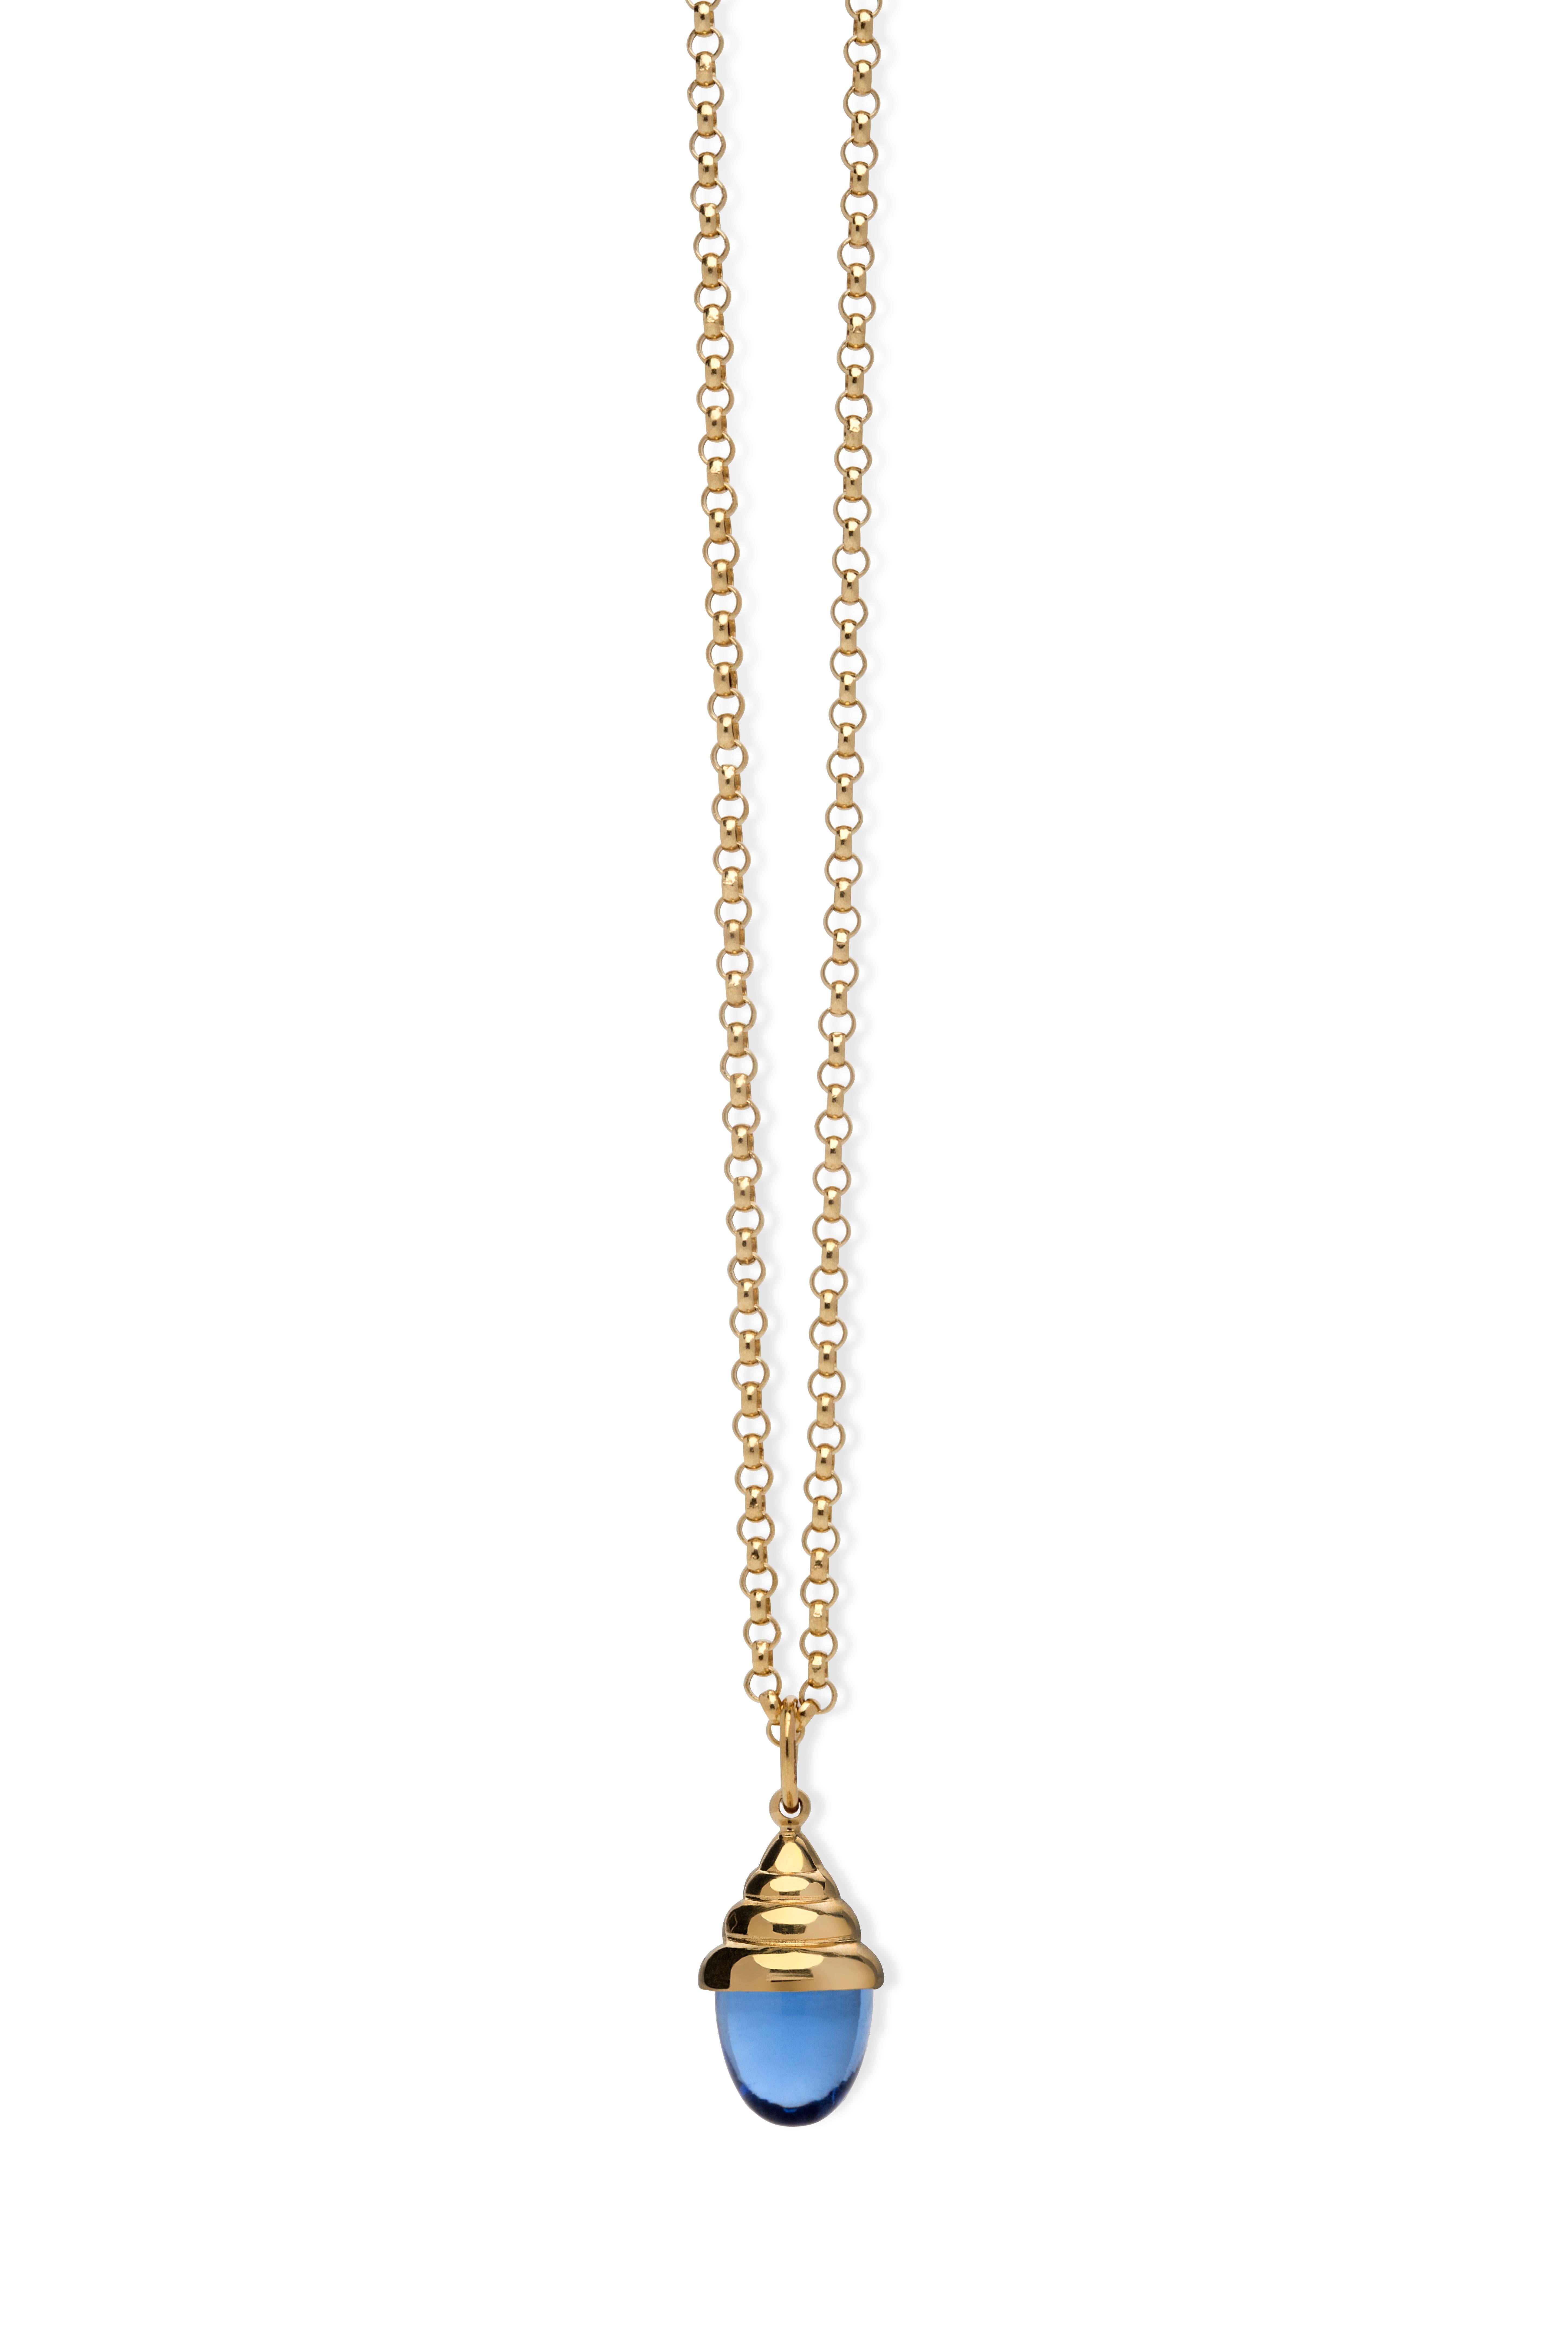 Green Amethyst Chic Quartz 18 Karat Yellow Solid Gold Drop Pendant Necklace For Sale 4